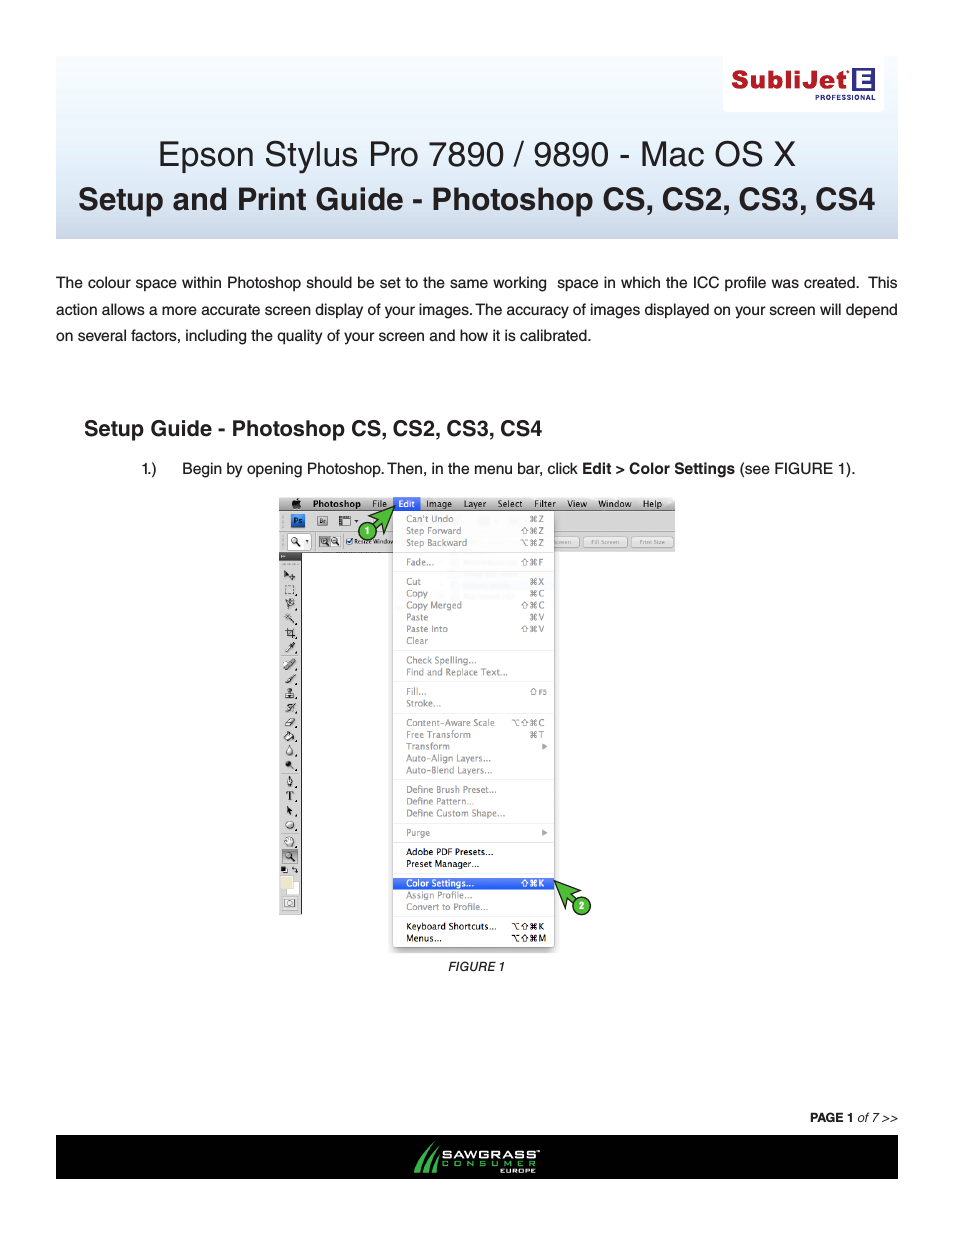 SubliJet E Epson Stylus Pro 9890 (Mac ICC Profile Setup): Print & Setup Guide Photoshop CS - CS4